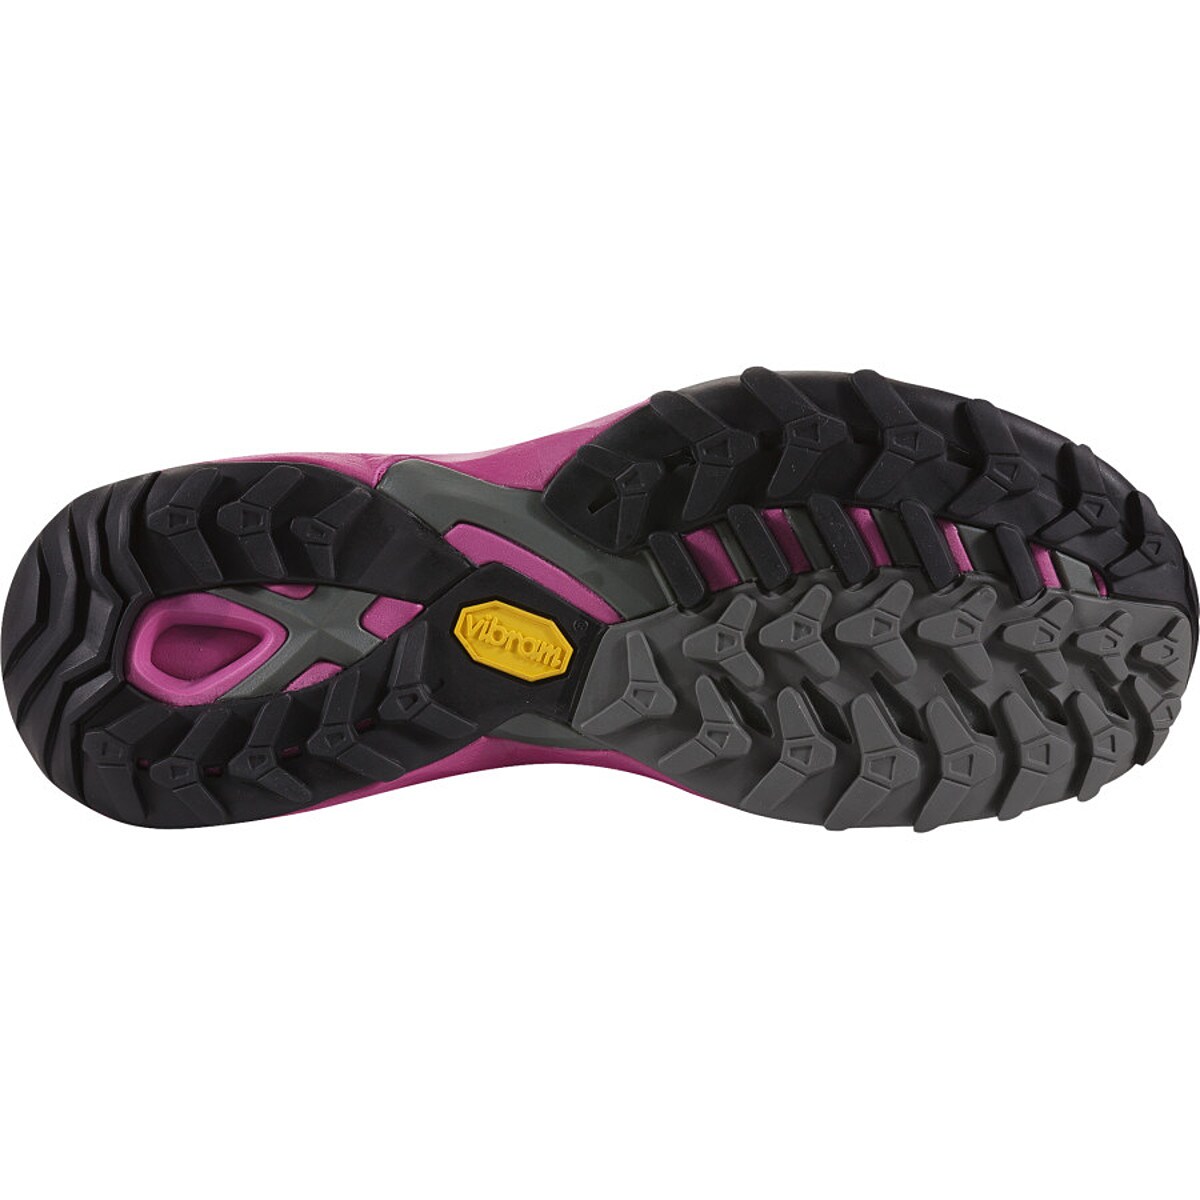 The North Face Hedgehog Guide GTX Hiking Shoe - Women's - Footwear